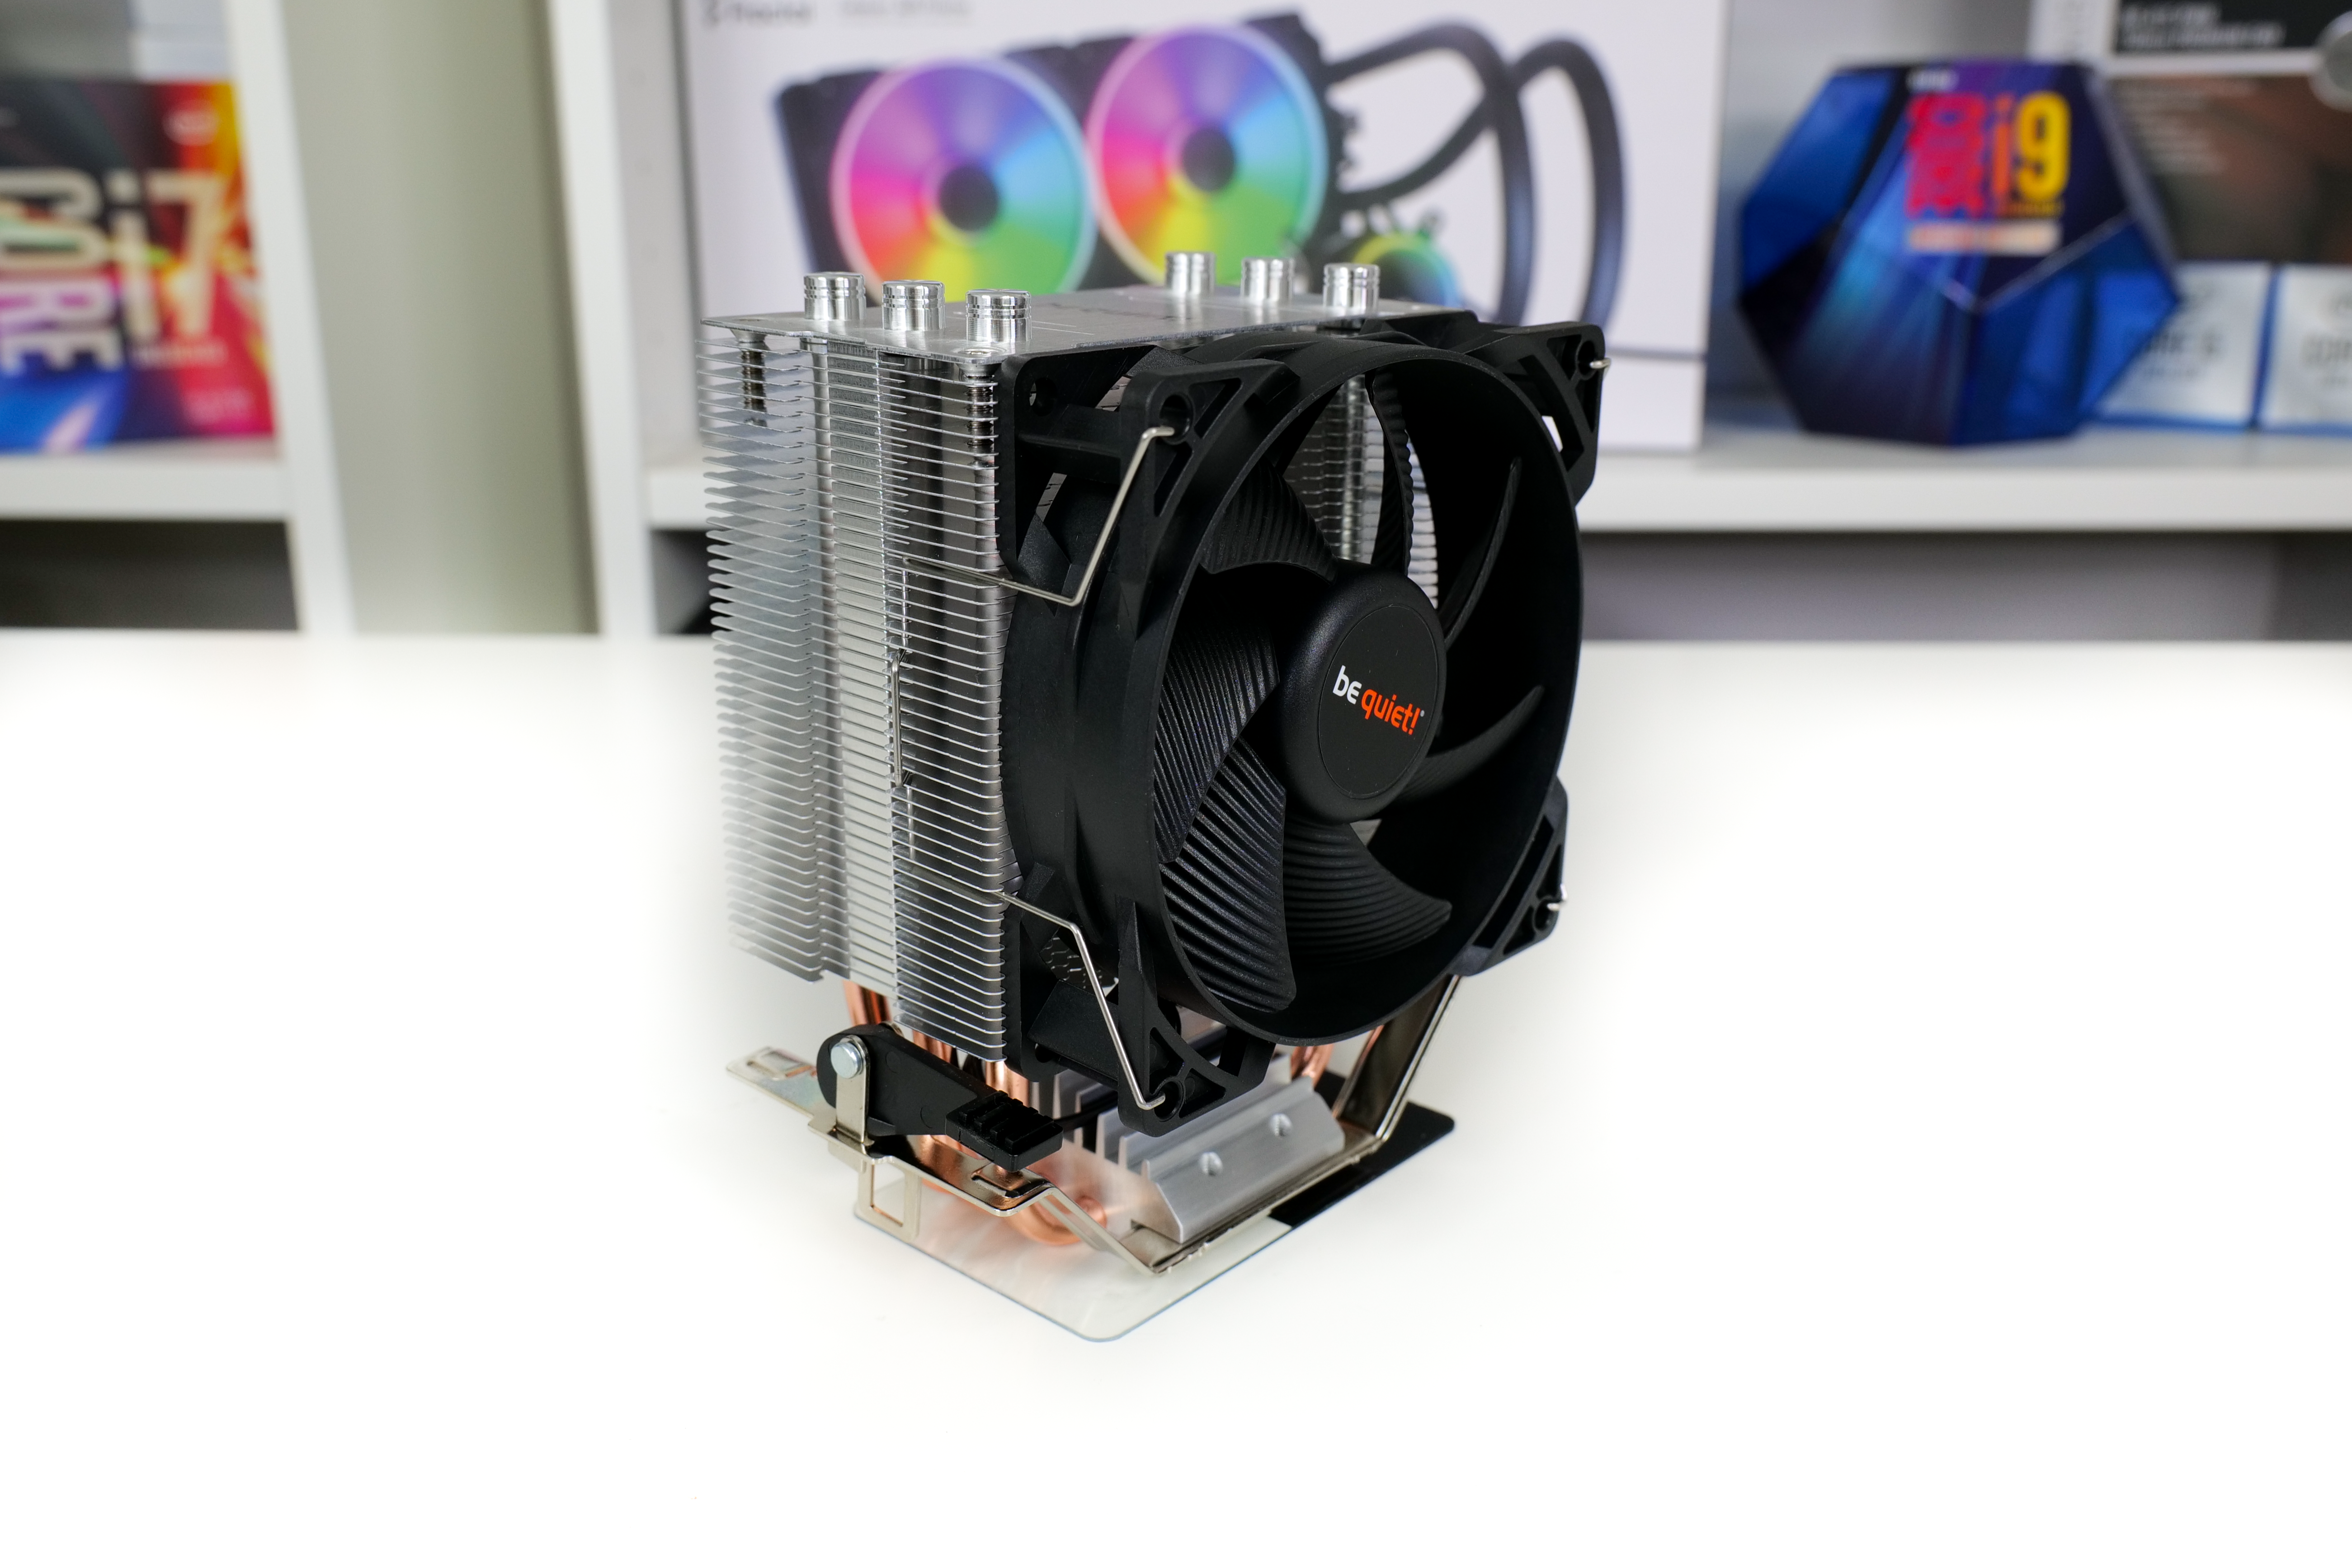 dark regulate Incubus be quiet! Pure Rock Slim 2 CPU Cooler Review | KitGuru